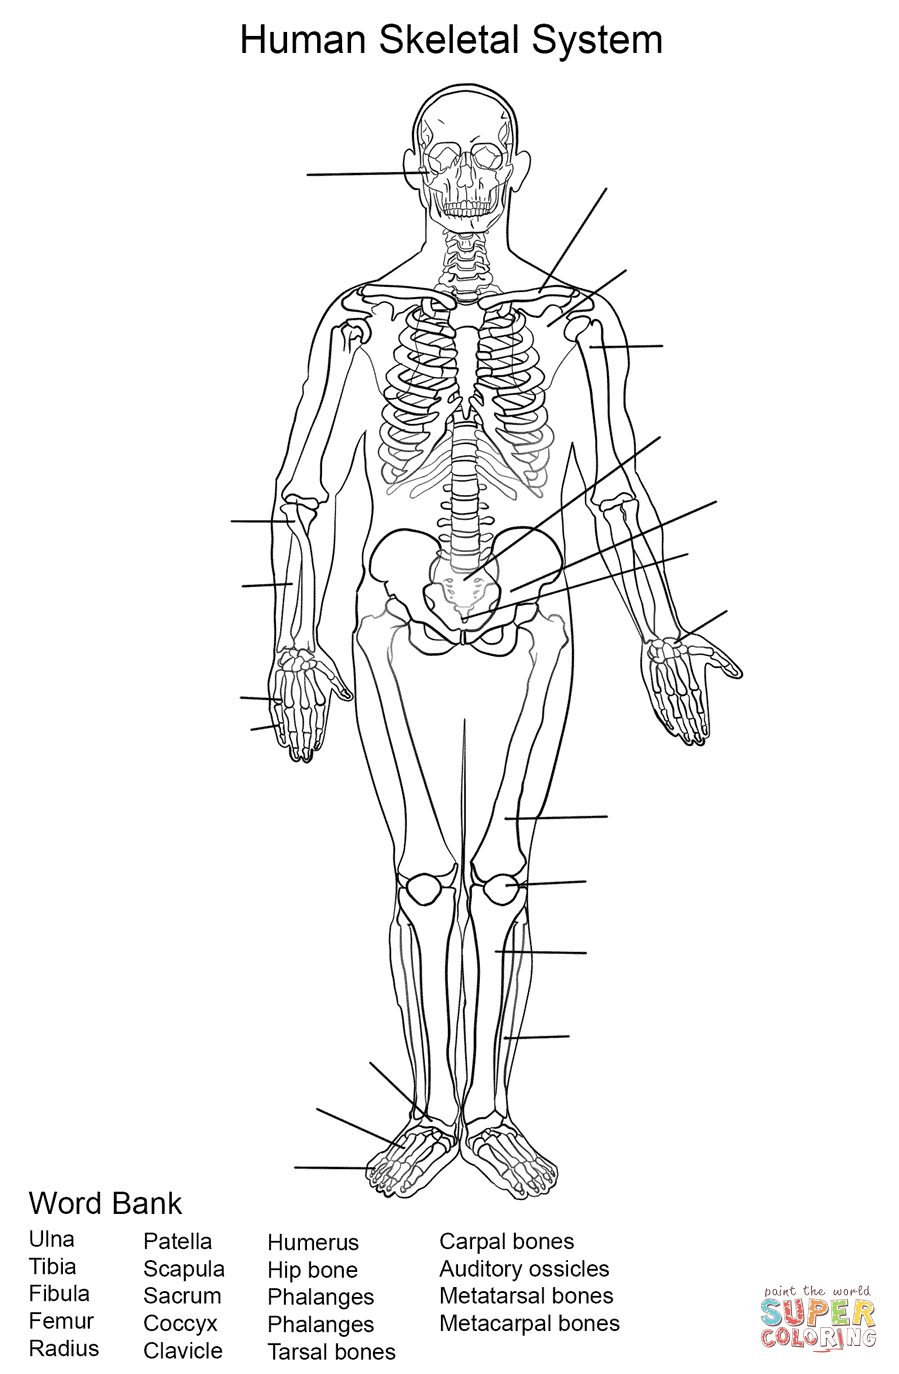 Human Skeleton Coloring Pages Human Skeletal System Worksheet Coloring Page Free Printable